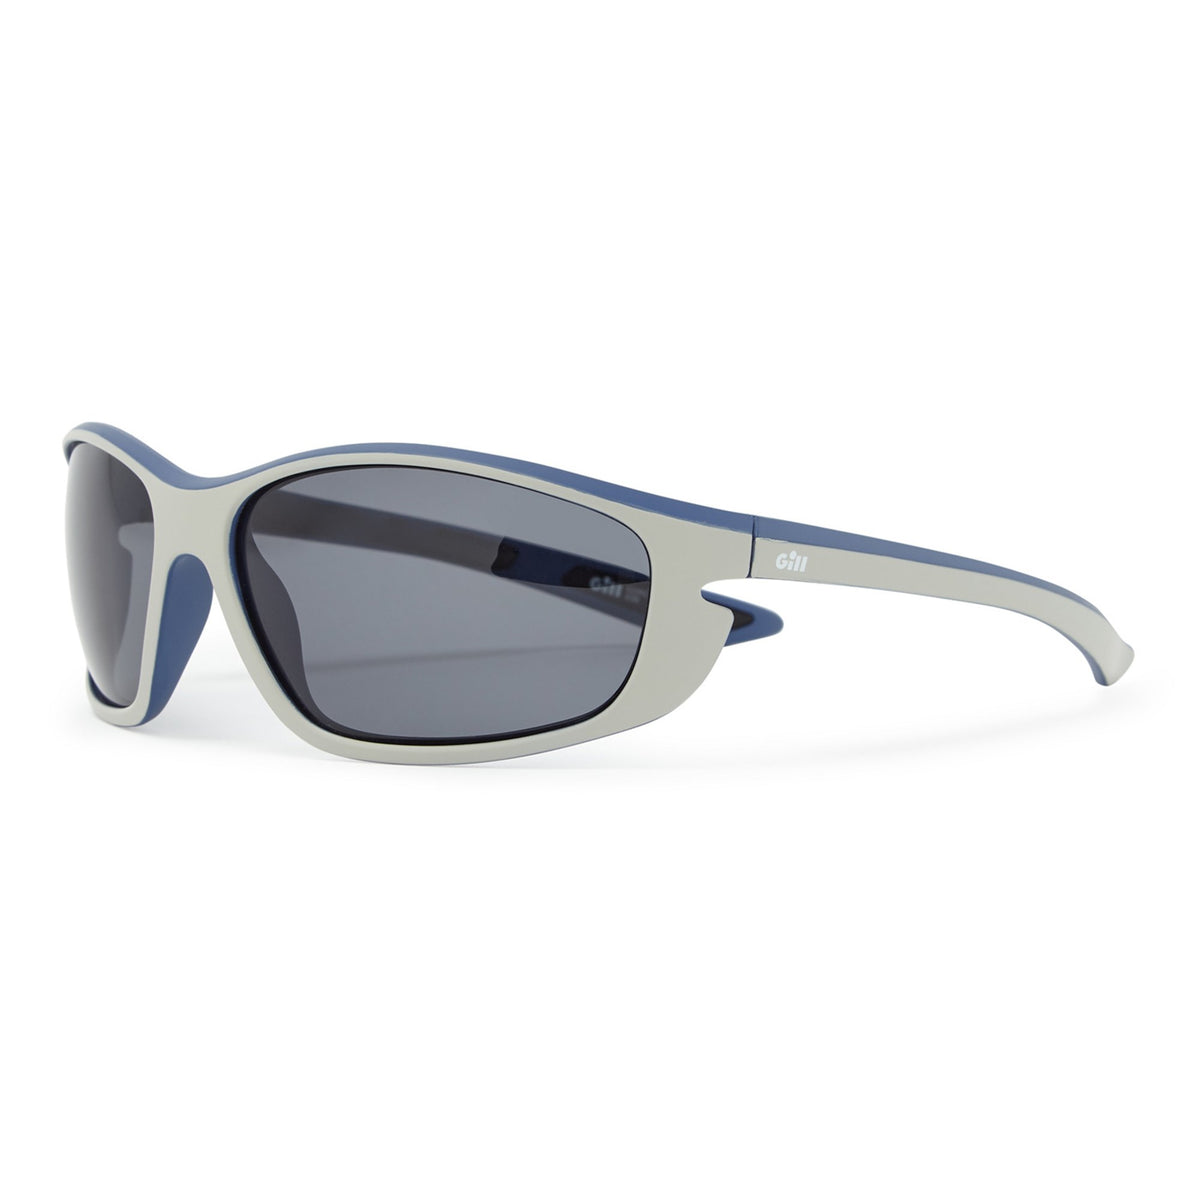 GILL Corona Sunglasses Silver/Smoke - One Size